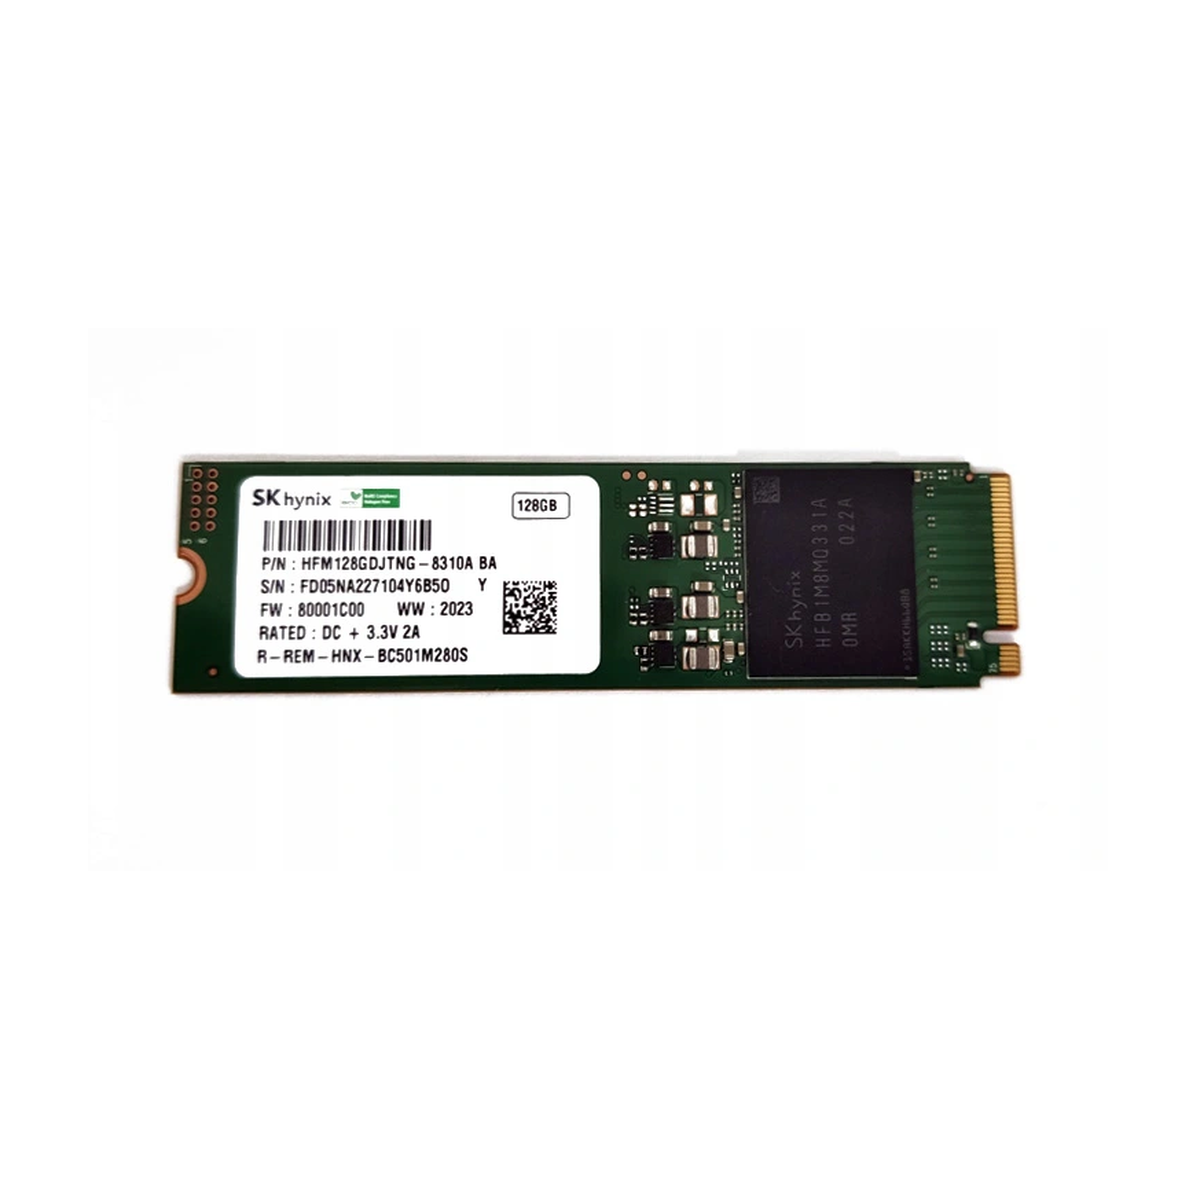 DYSK SK HYNIX 128GB SSD M.2 2280 NVMe HFM128GDJTNG